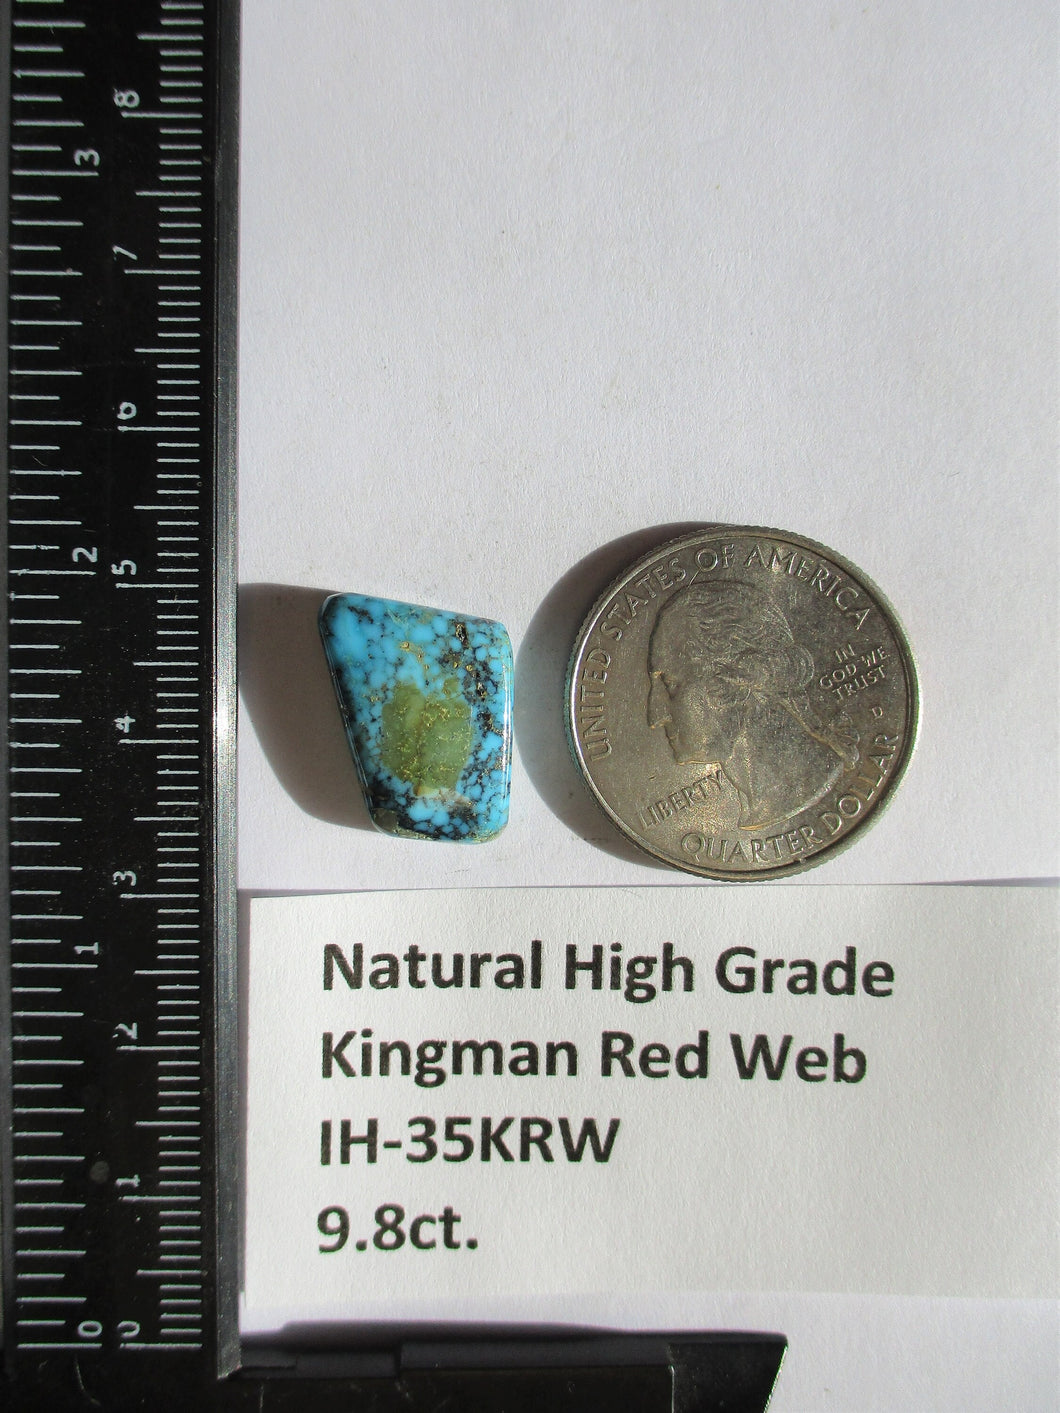 9.8 ct. (16x13x5 mm) 100% Natural High Grade Kingman Red Web Turquoise Cabochon Gemstone, # IH 35